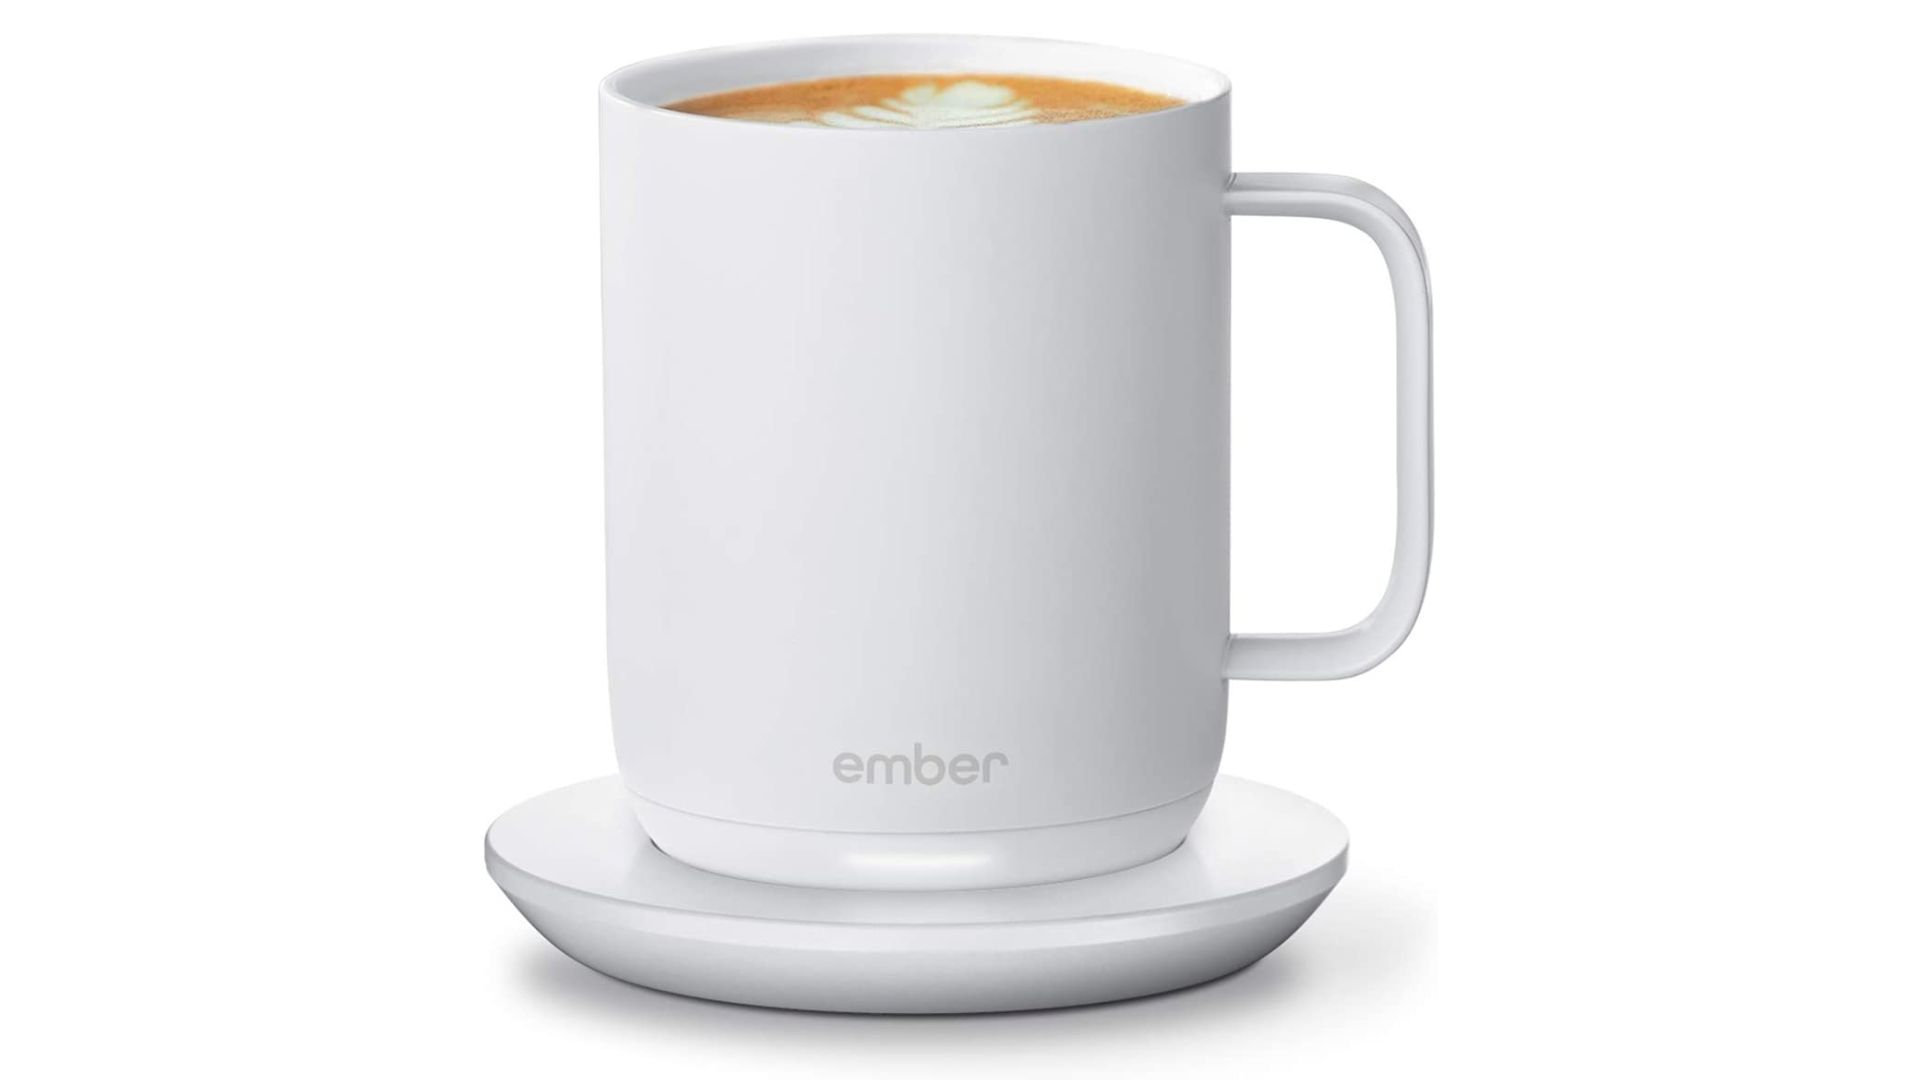 Office gadgets: smart mug